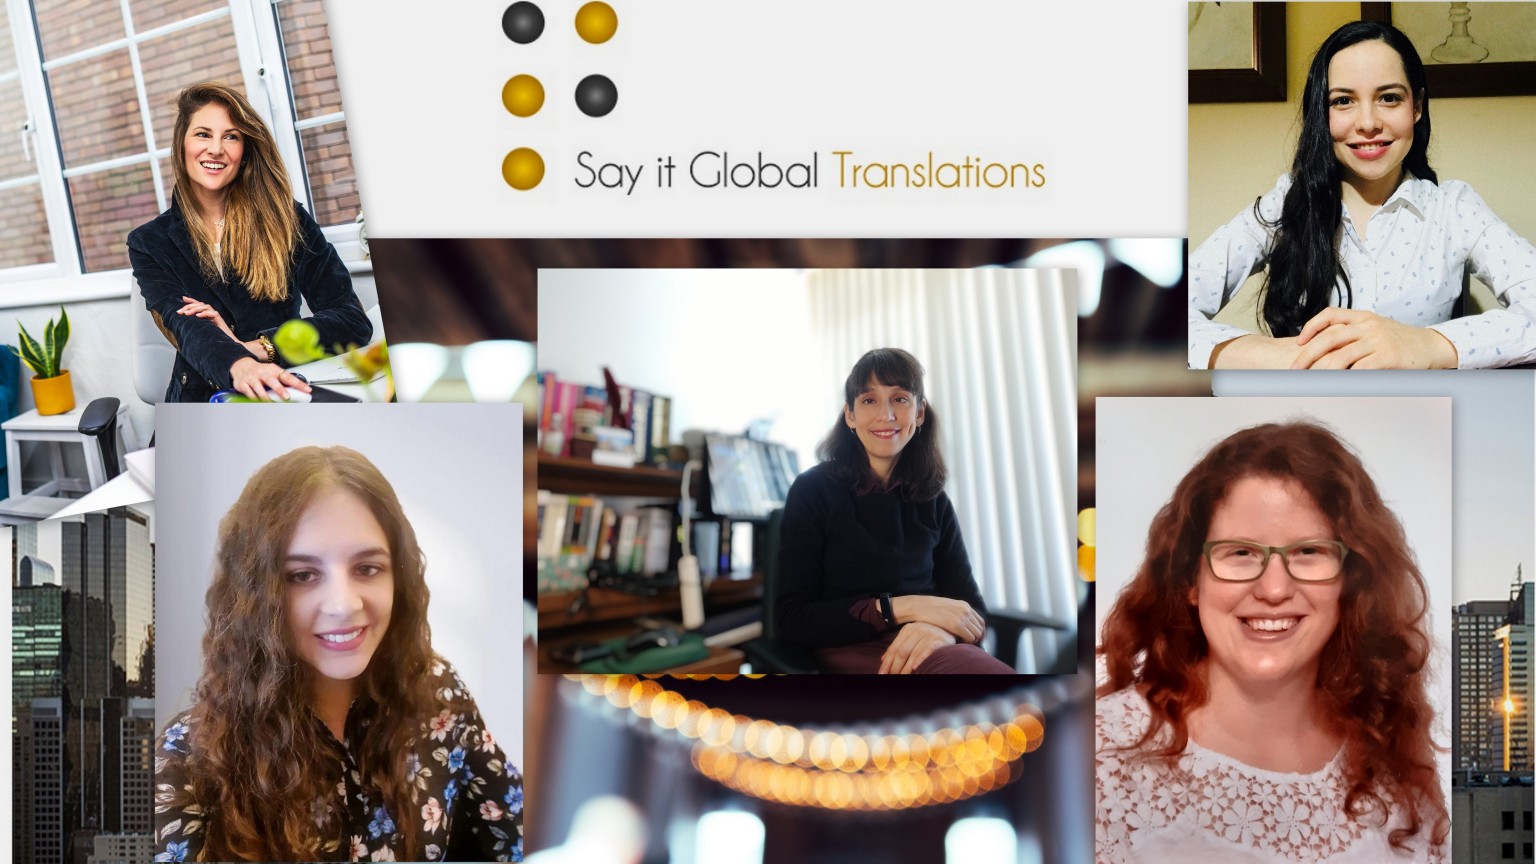 The Essex alumni behind Say It Global Translations